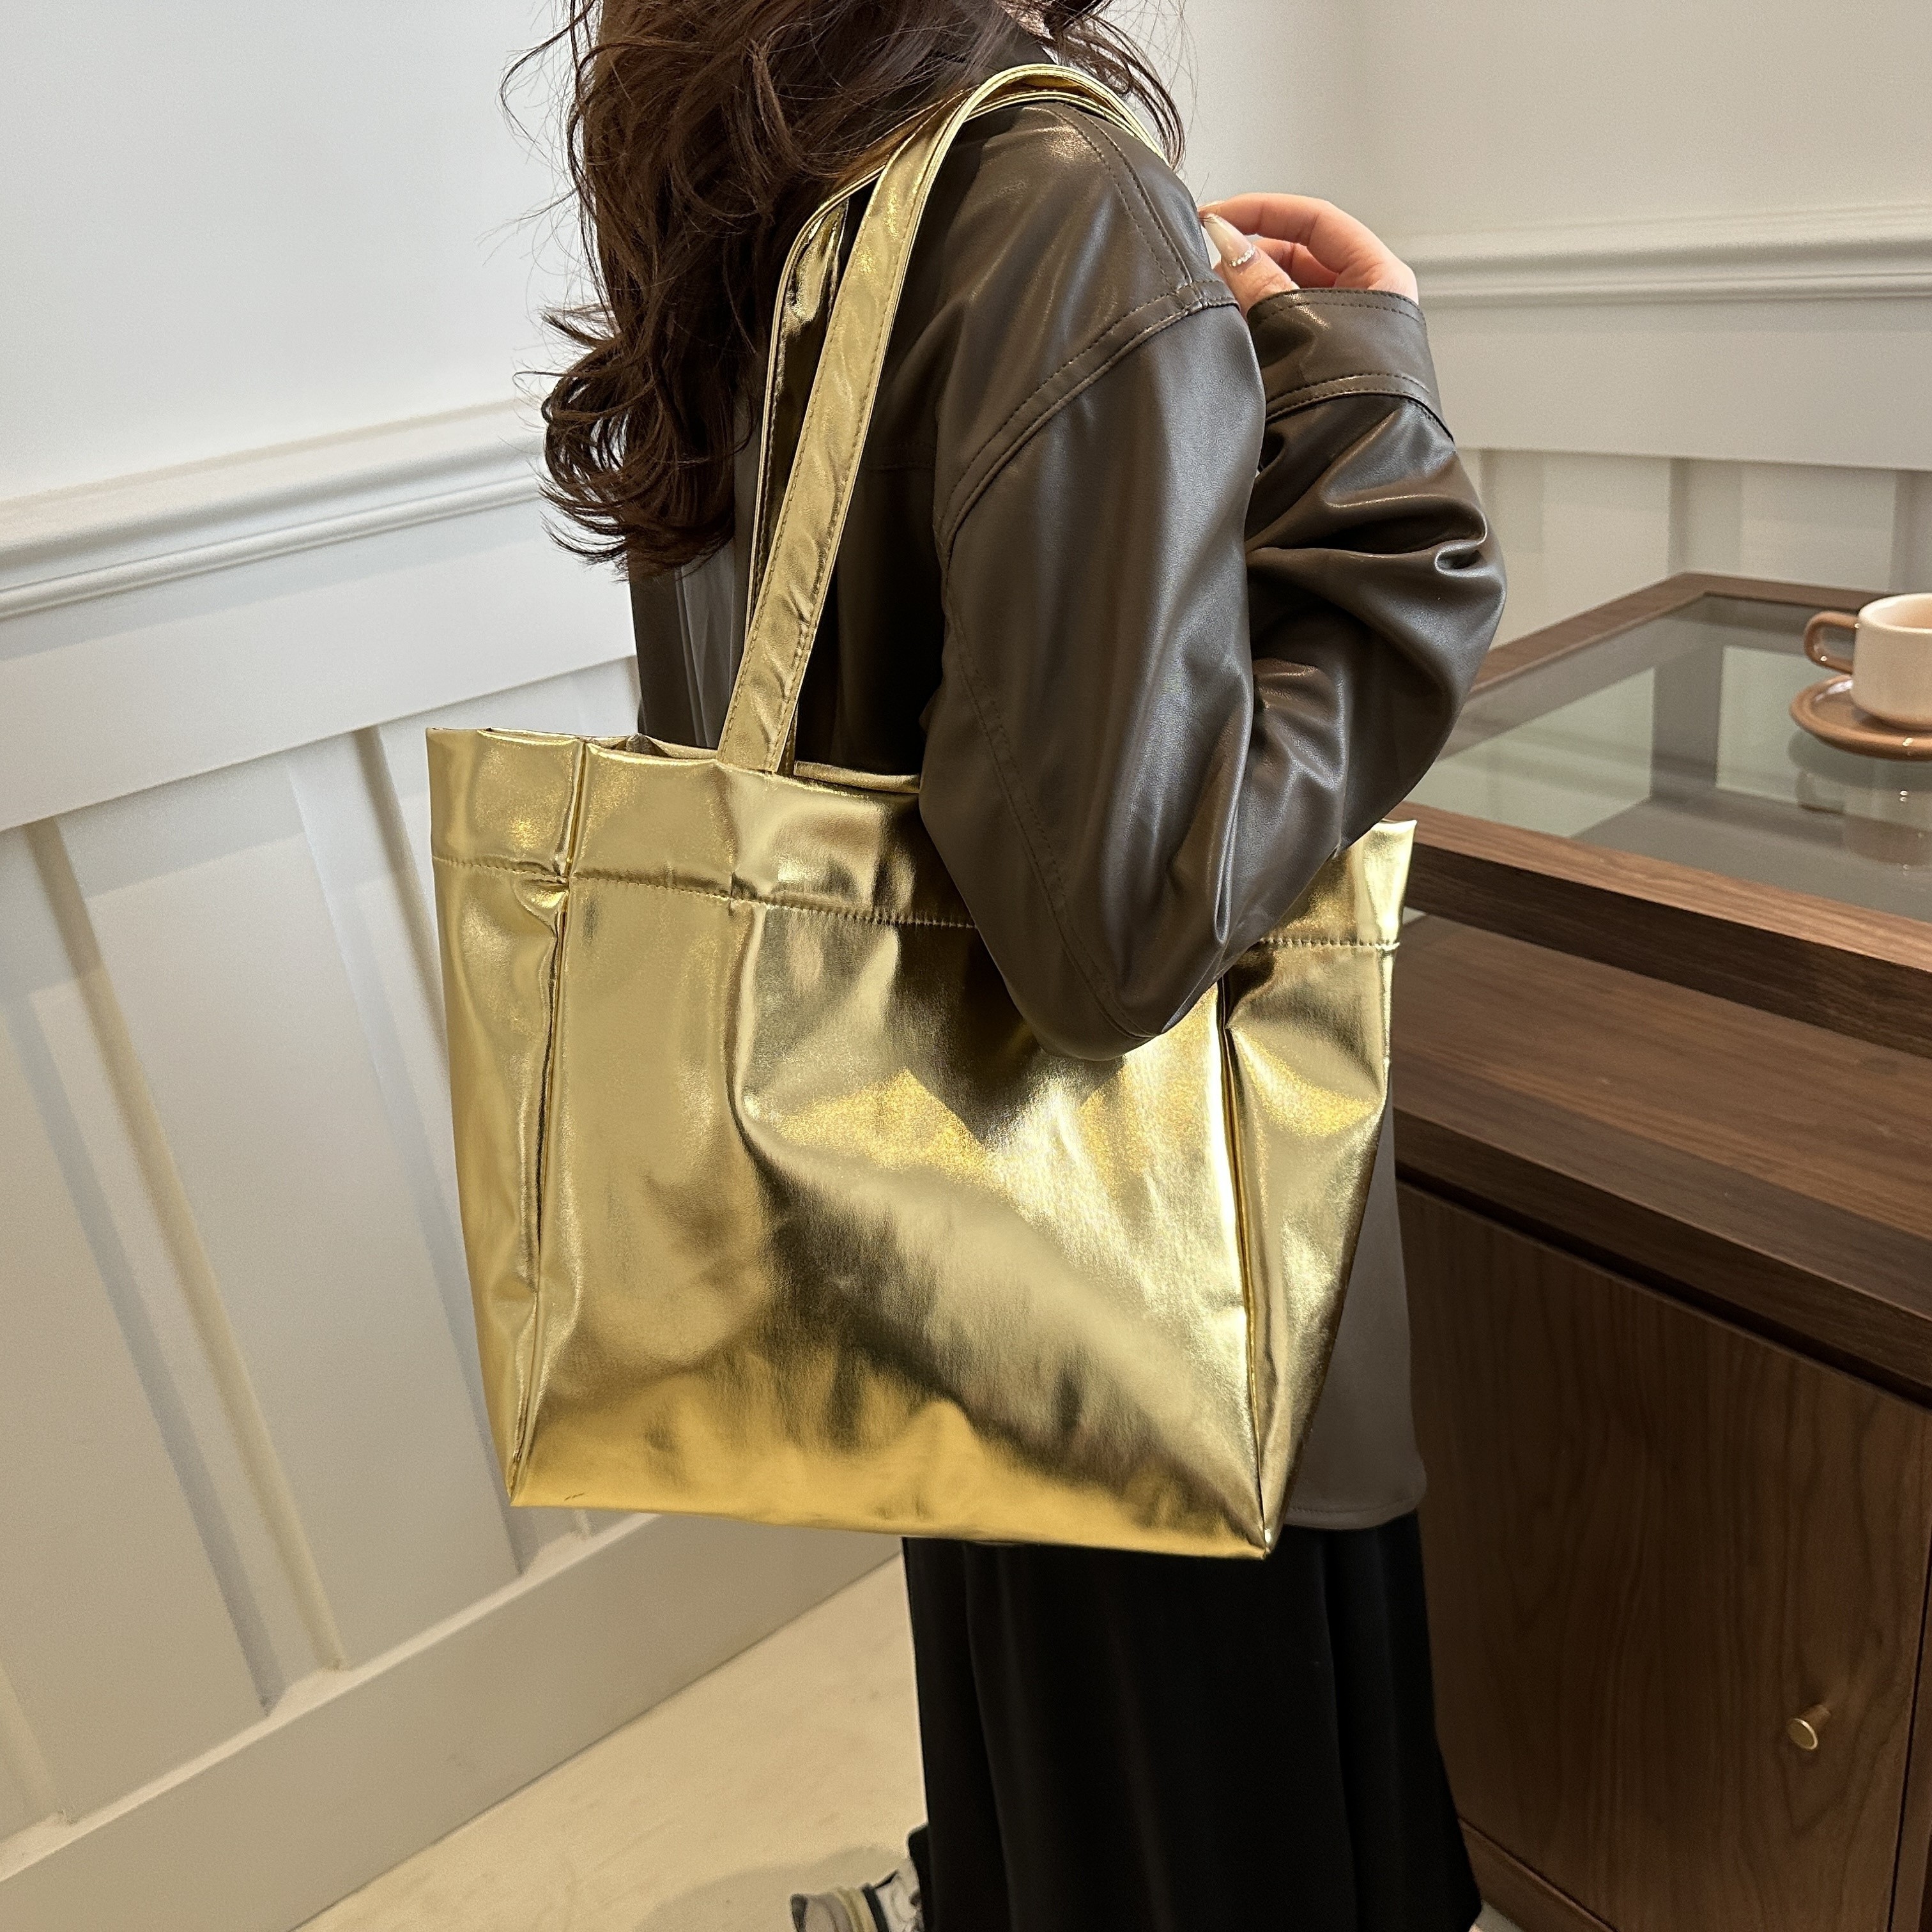 

Large Capacity Solid Color Handbag, Fashionable Shopping Bag For School, Work, Commuter Shoulder Tote Bag For Women